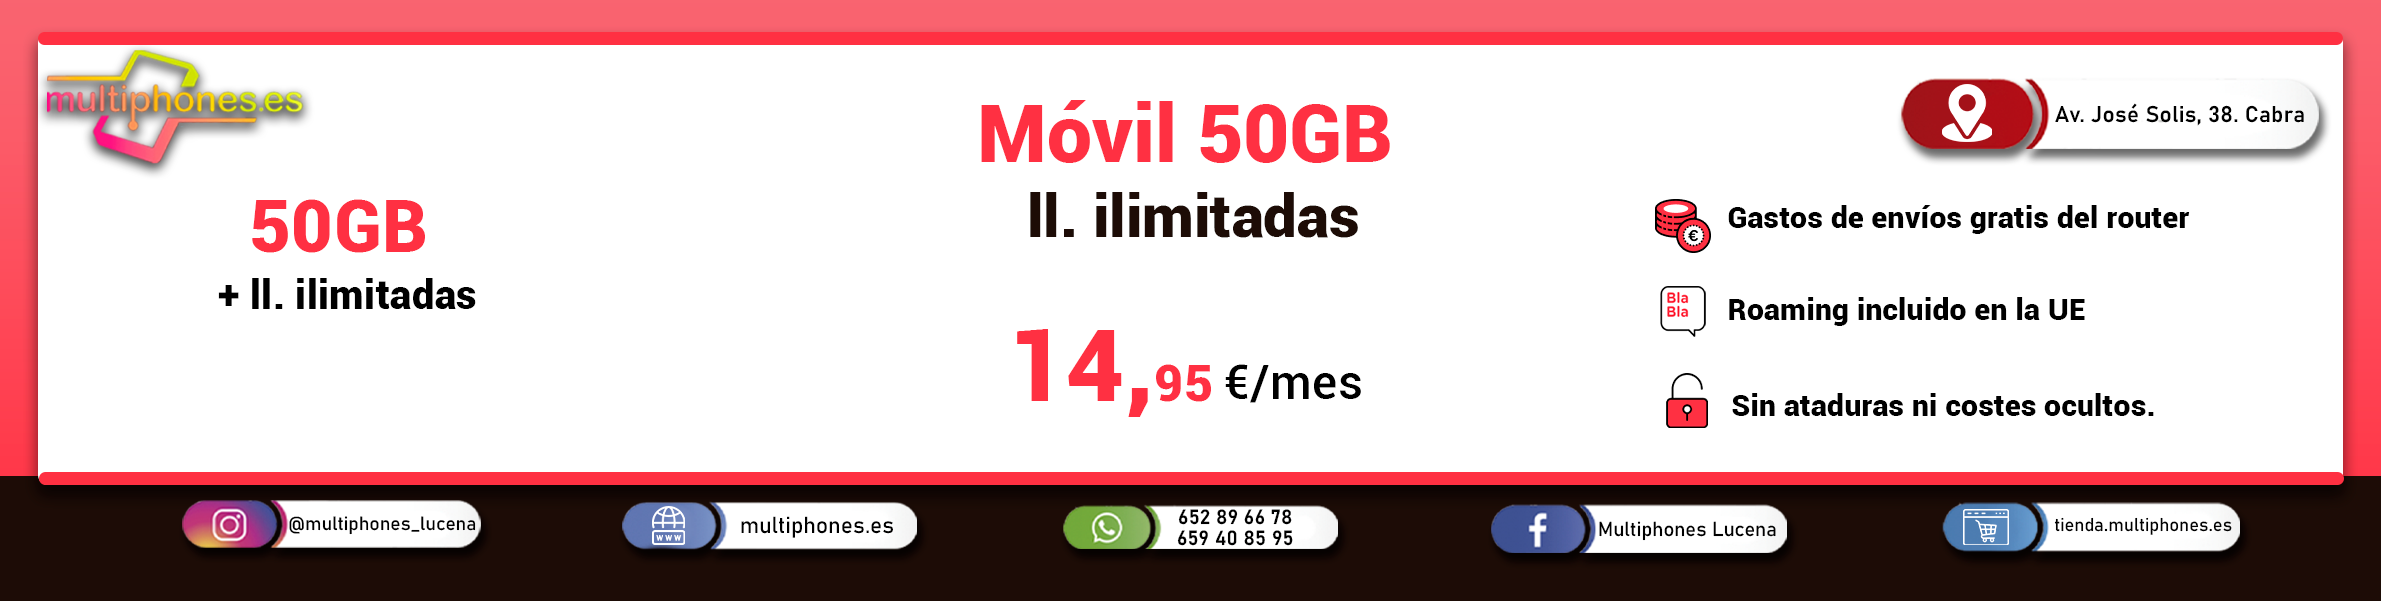 Lowi – Móvil 50GB